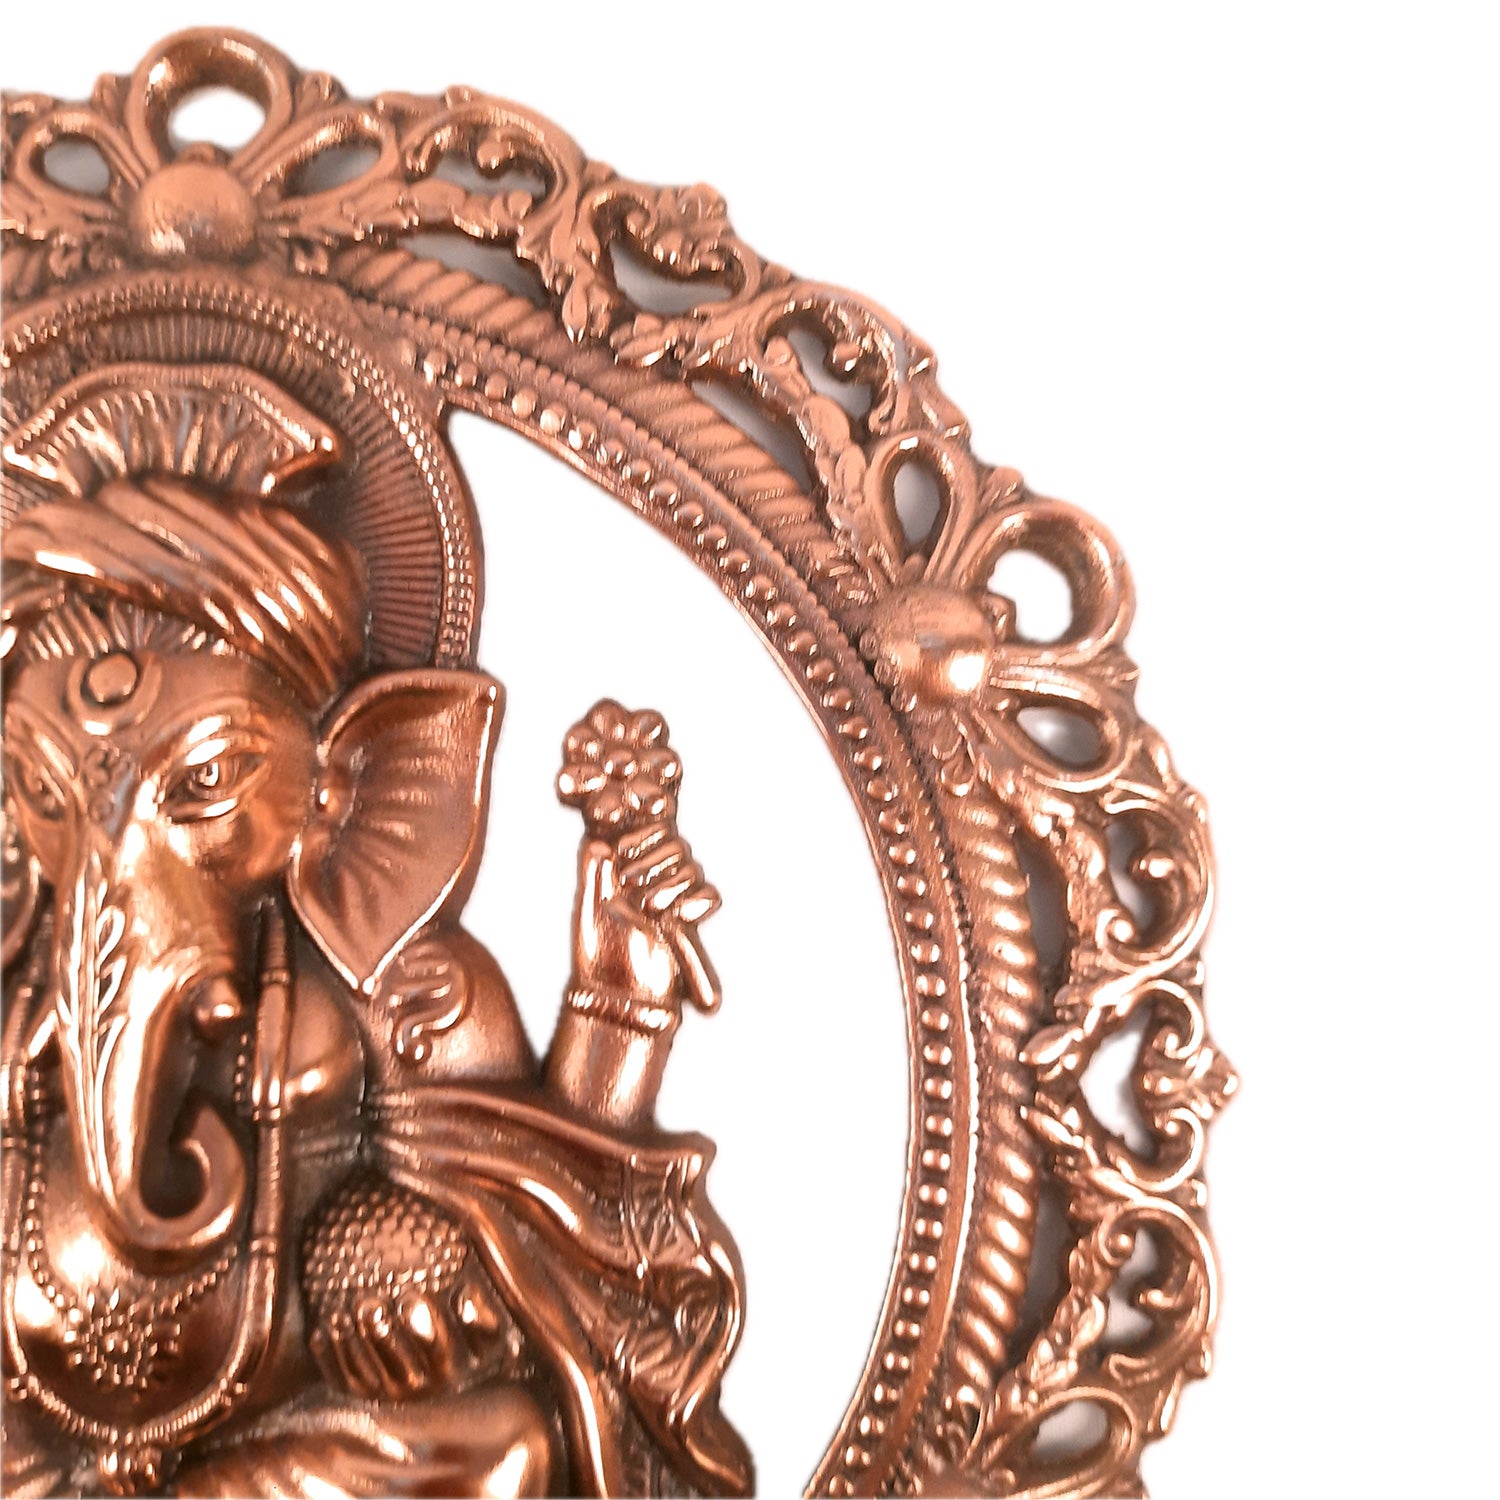 Lord Ganesh Wall Hanging Idol | Metal Ganesha Wall Statue Decor for Main Gate | Ganpati Murti for Home, Puja & Religious Decor & Gift - 18 Inch - Apkamart